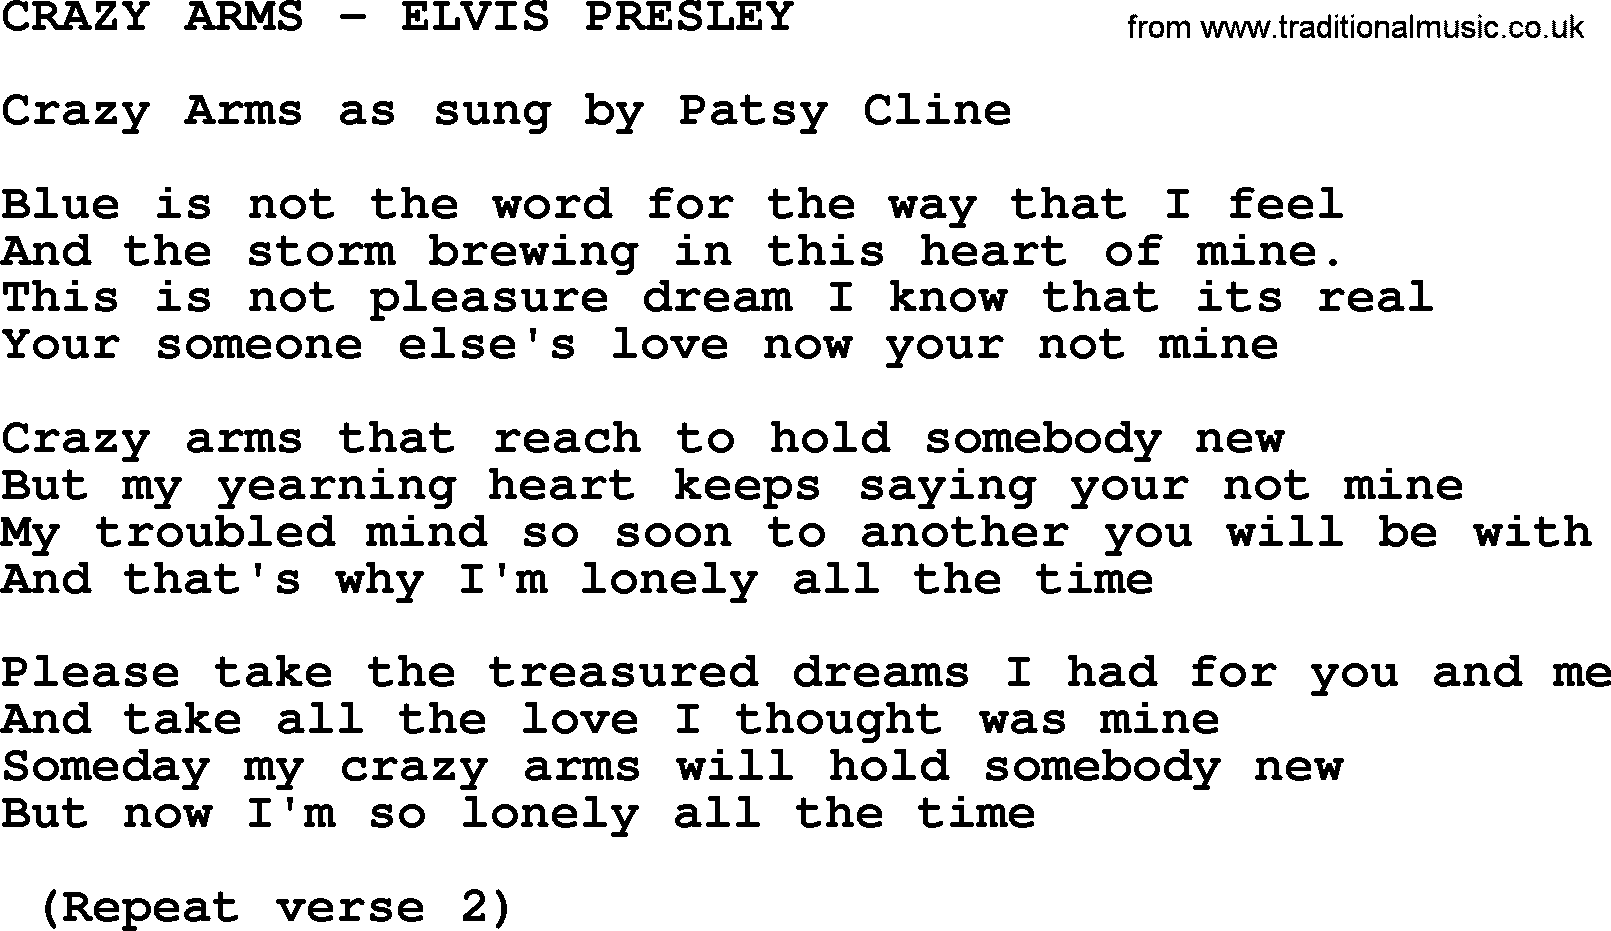 Elvis Presley song: Crazy Arms-Elvis Presley-.txt lyrics and chords